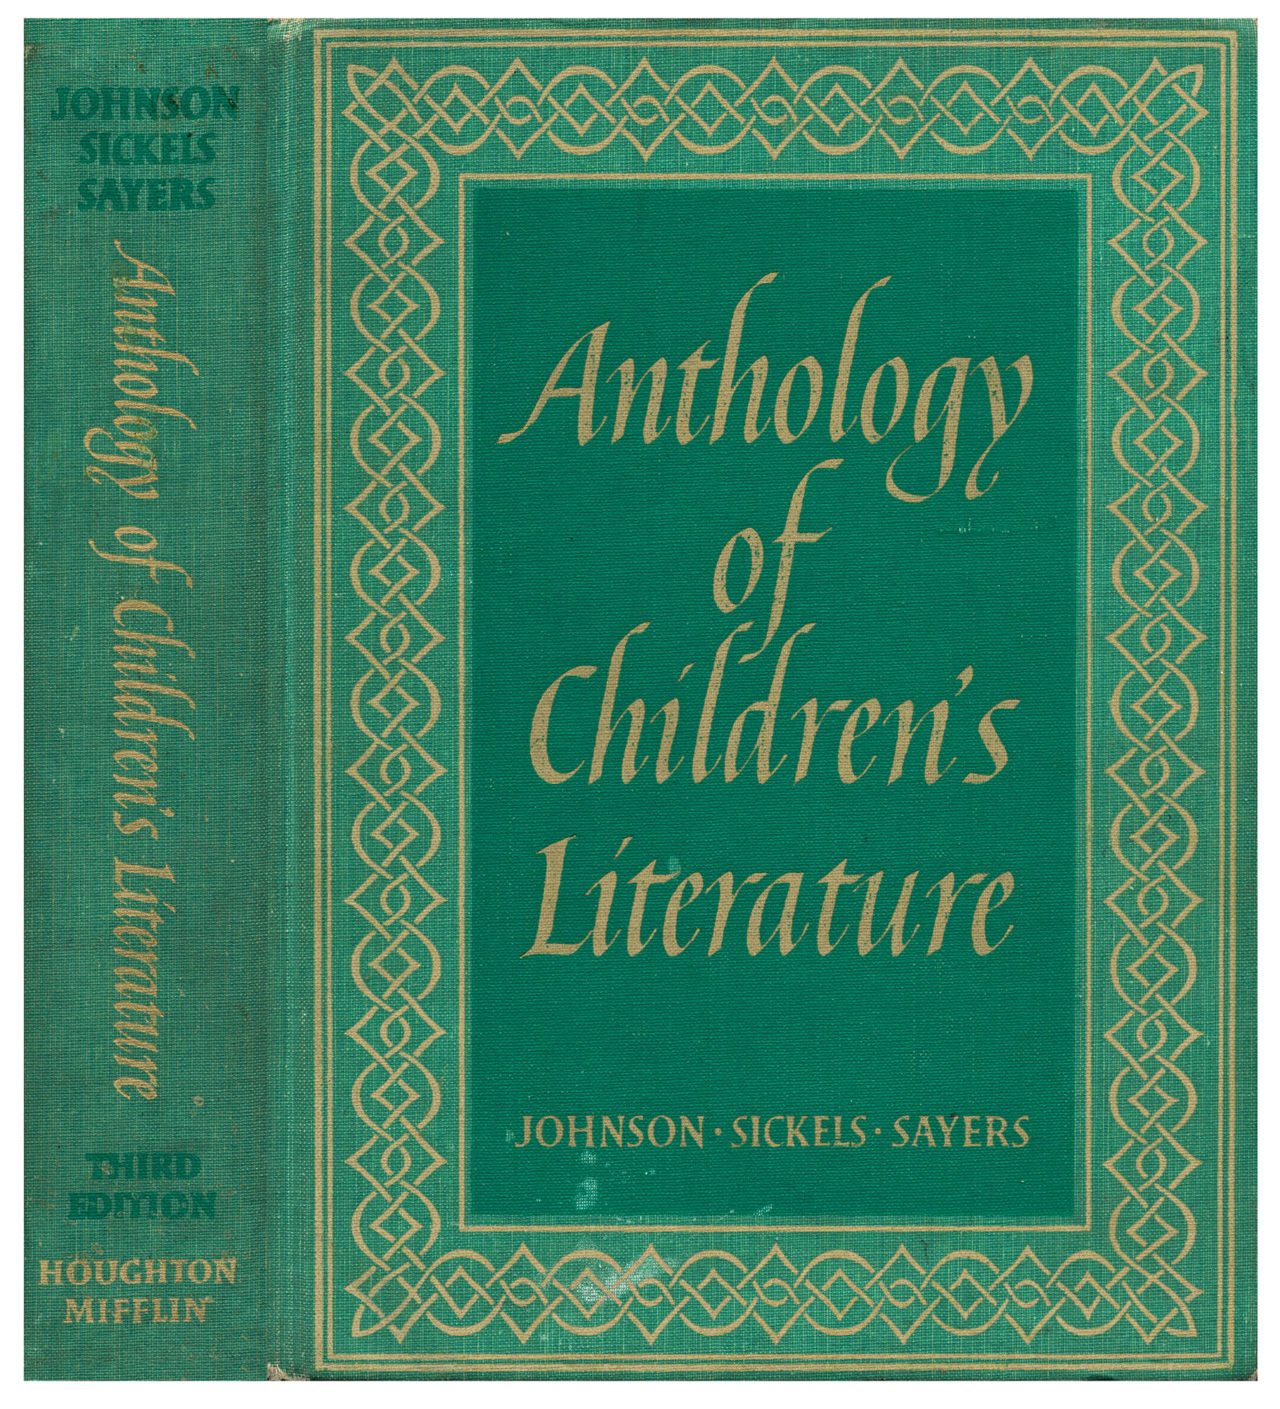 Anthology of Children’s Literature